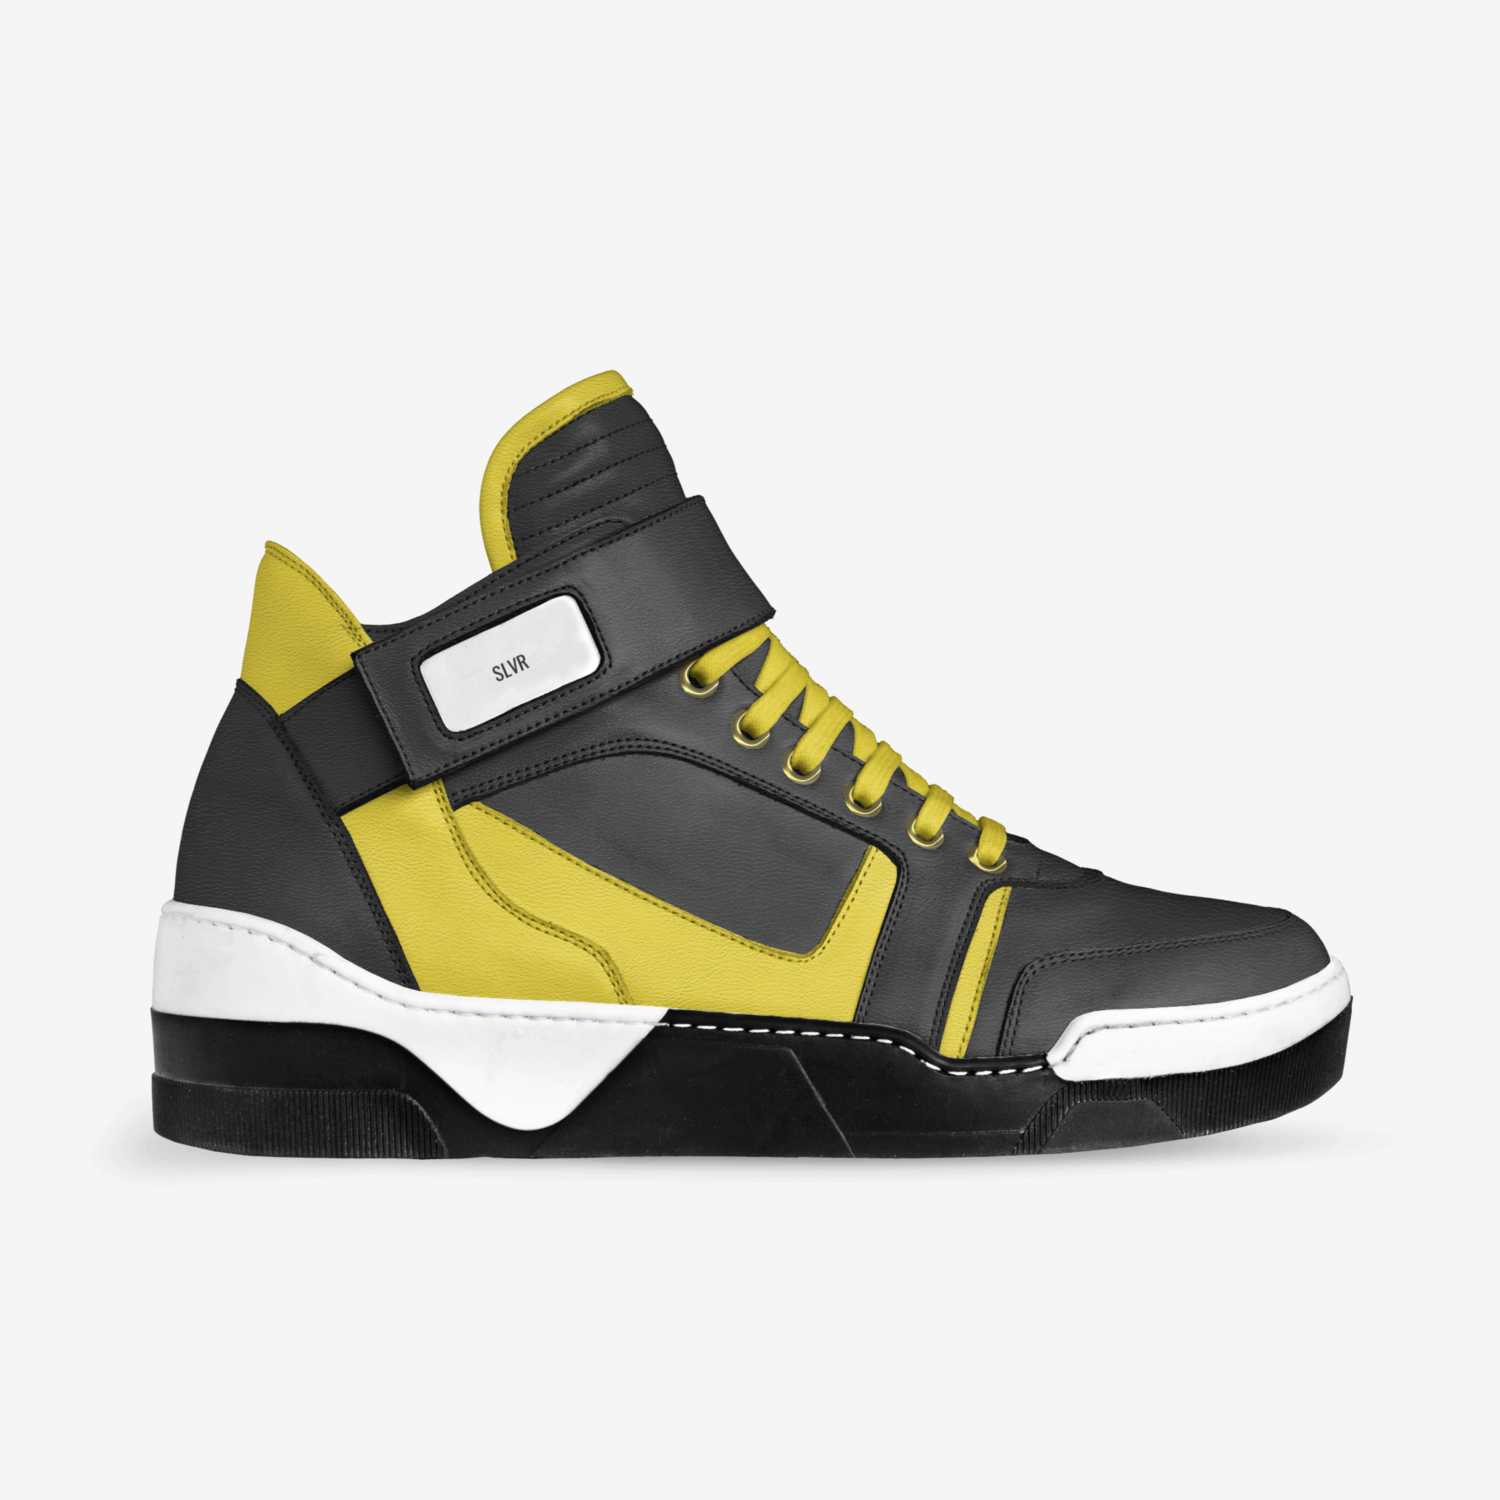 SLVR | A Custom Shoe concept by Declan White